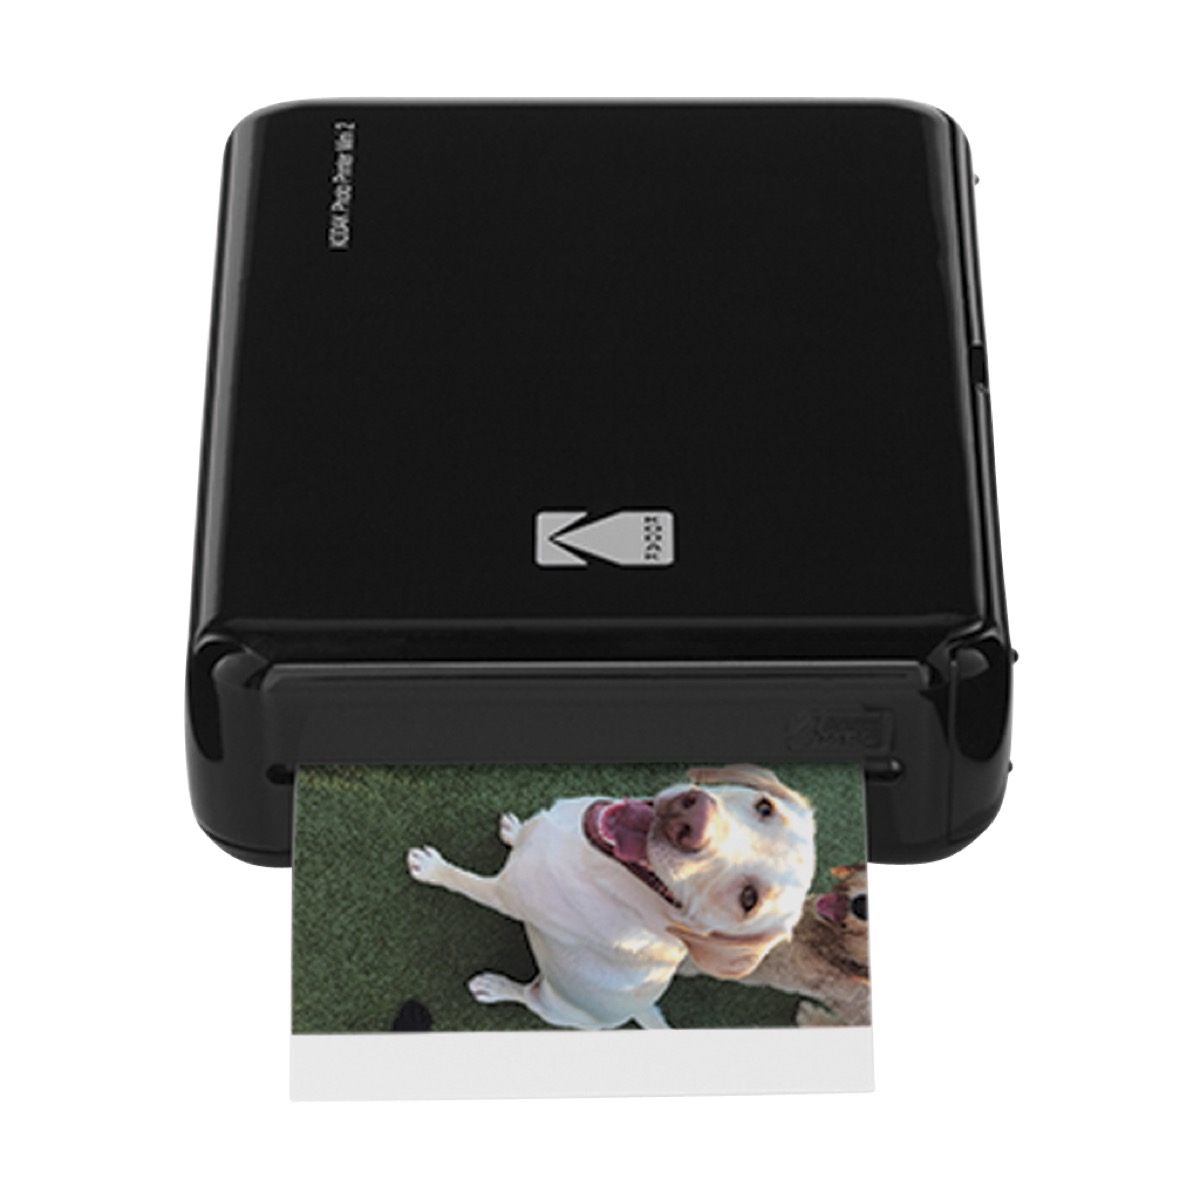 black printer printing photo of white dog